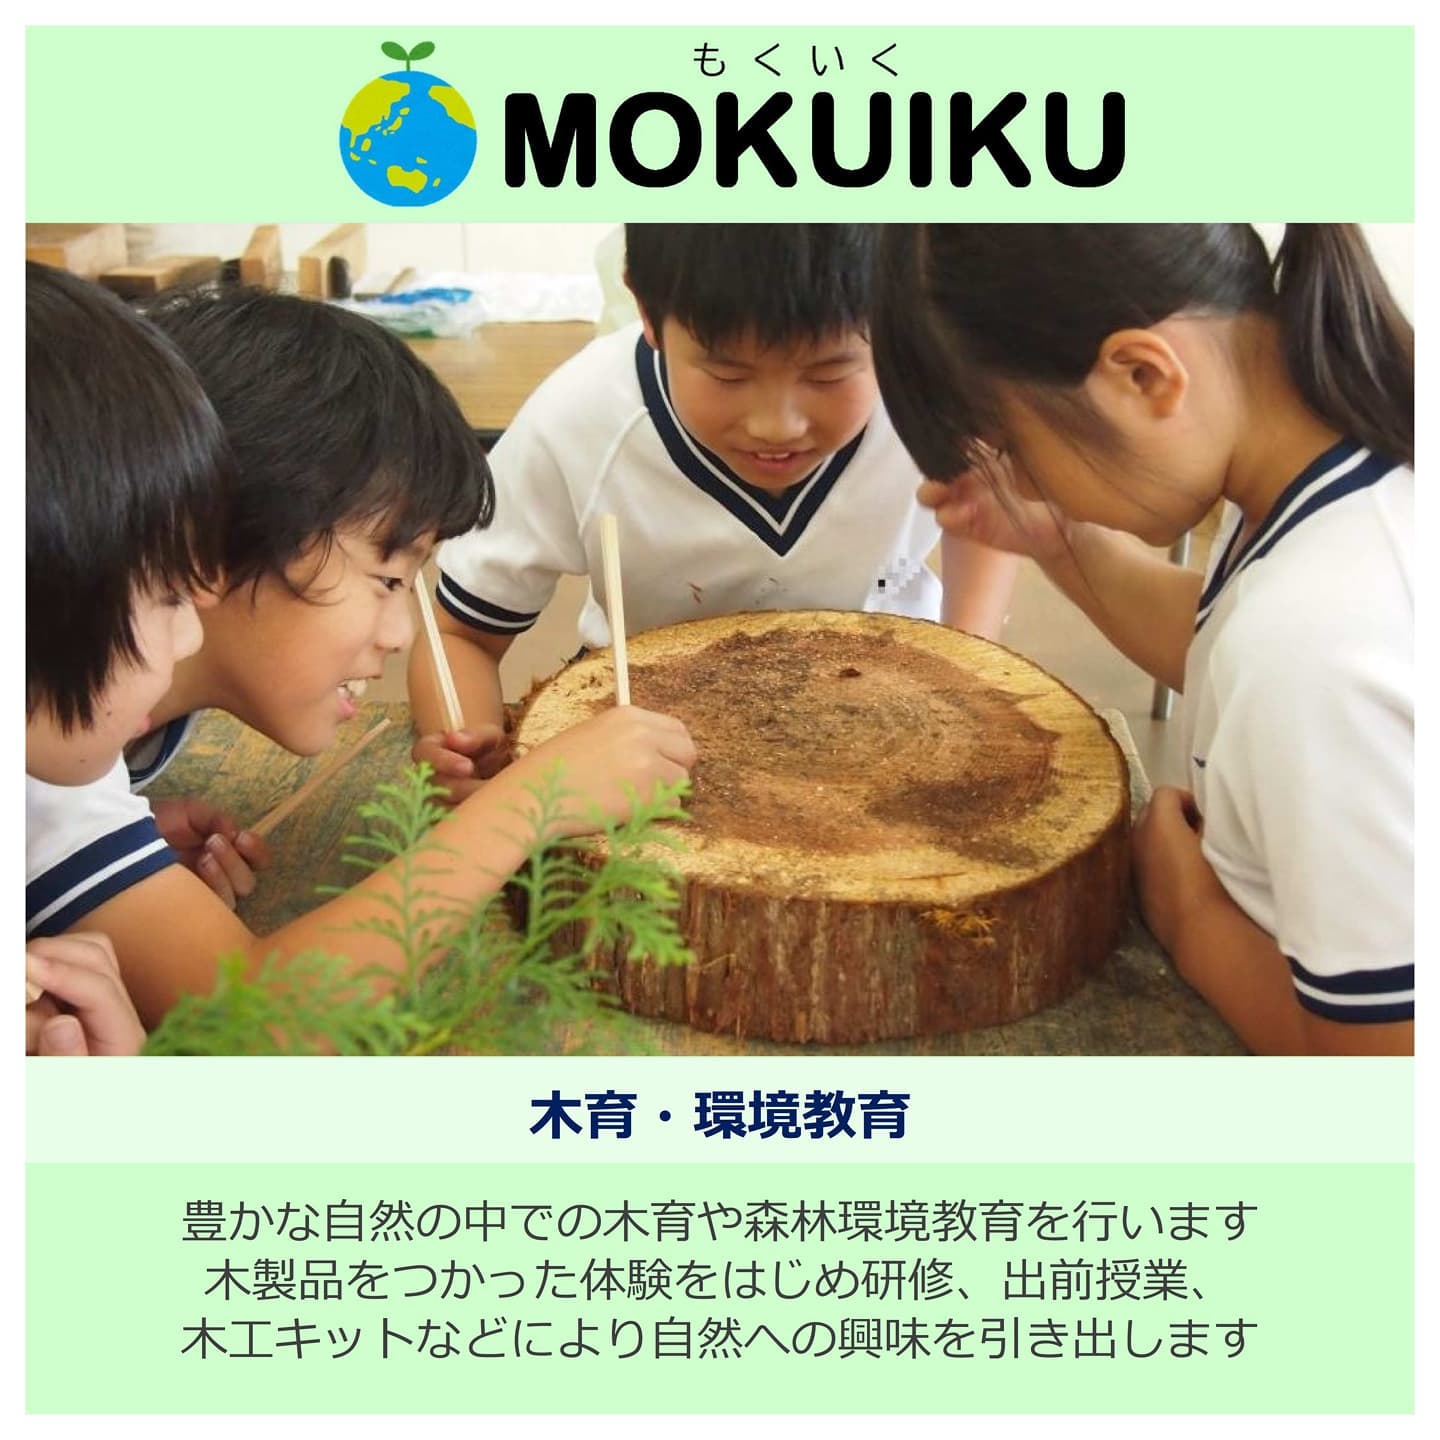 MOKUIKU 豊かな自然の中での体験や森林環境教育